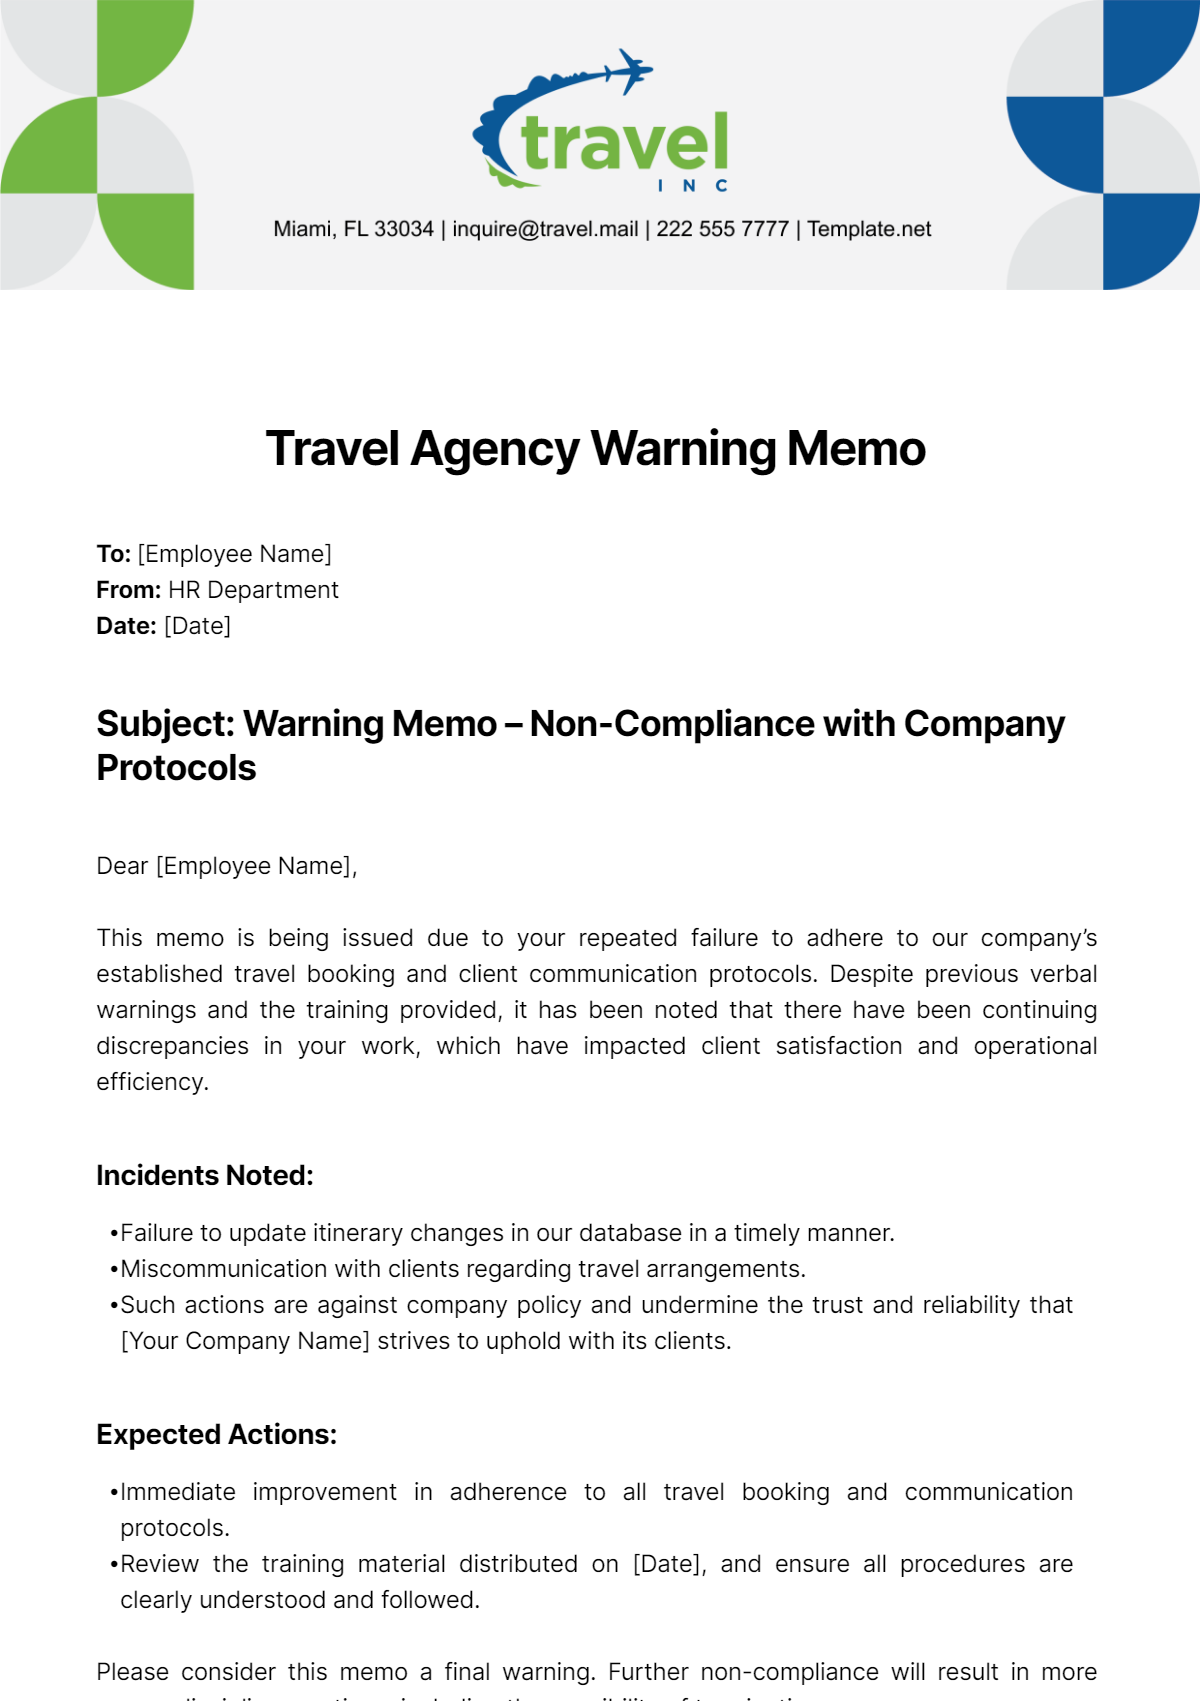 Free Travel Agency Warning Memo Template